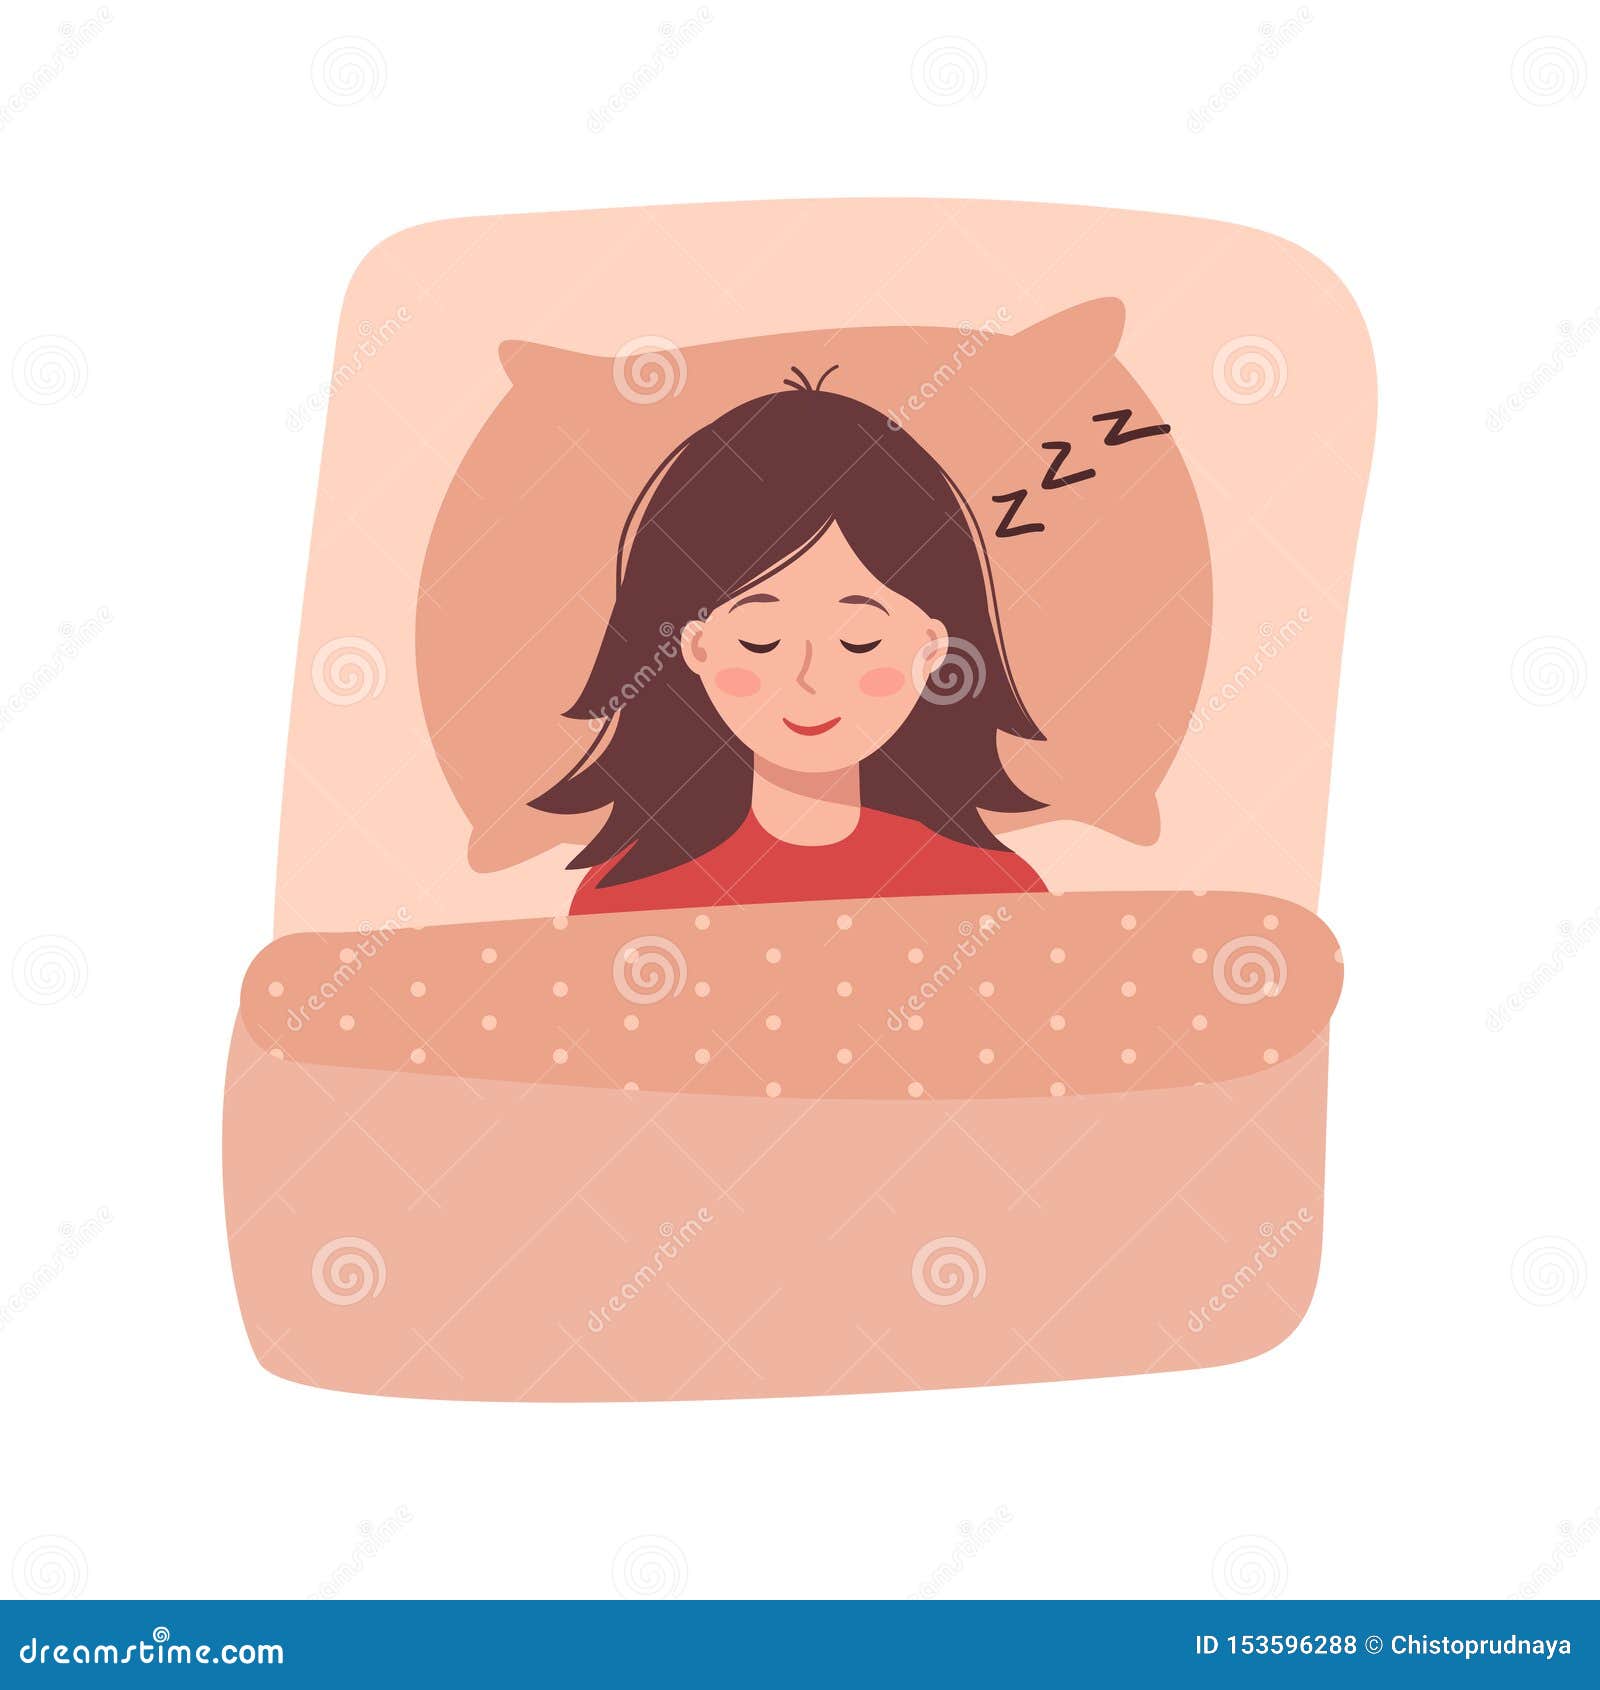 Sleeping baby girl stock vector. Illustration of cartoon - 153596288